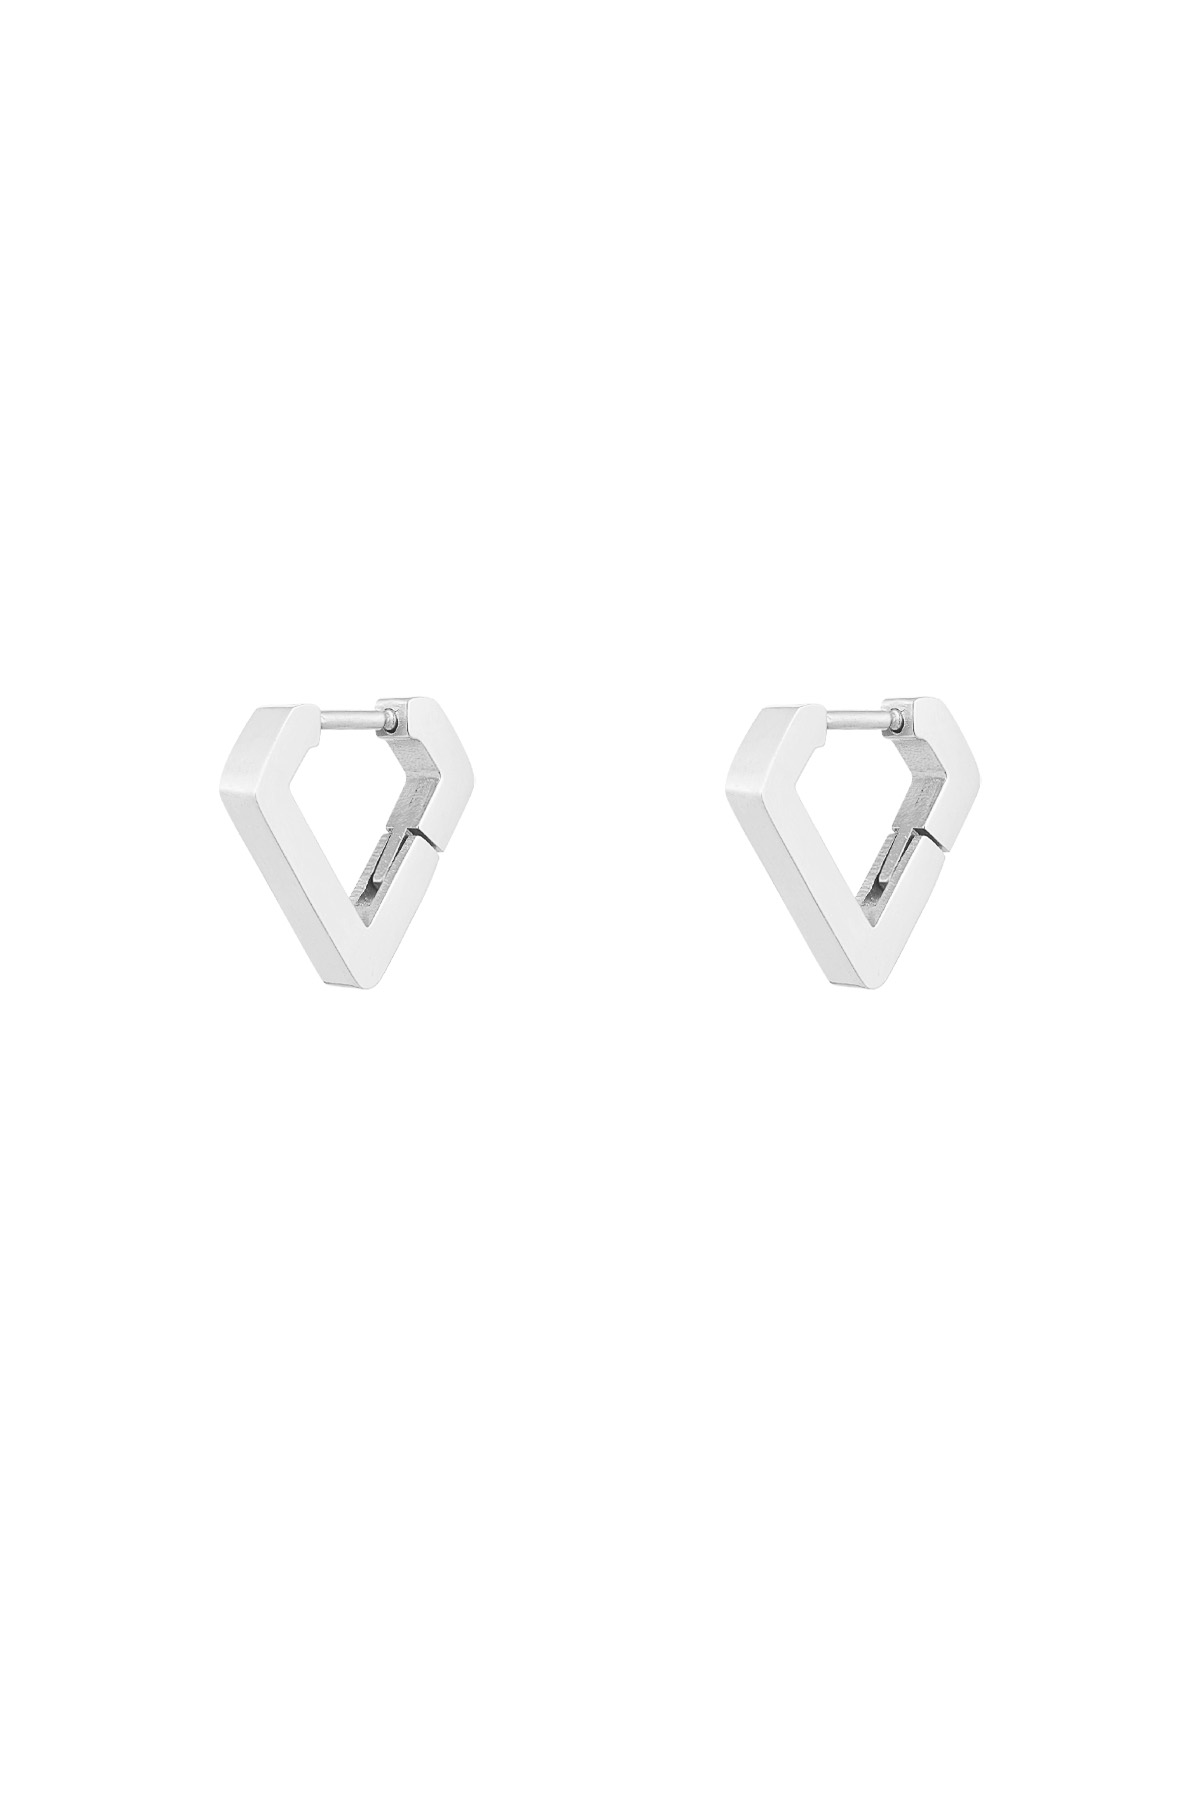 Diamond shape earrings small - silver